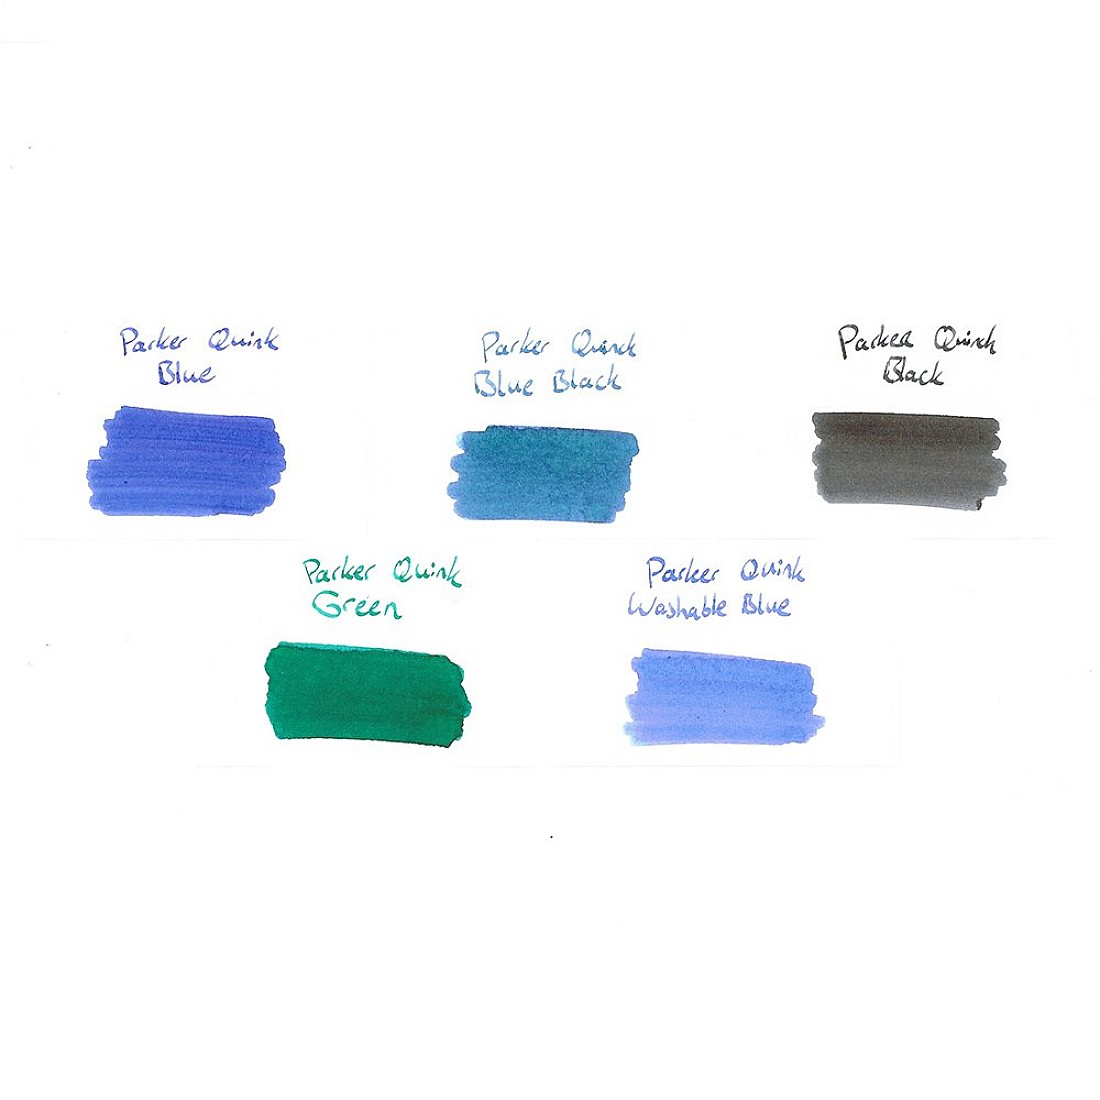 Parker Quink Ink - Ink Cartridges (5 colors)